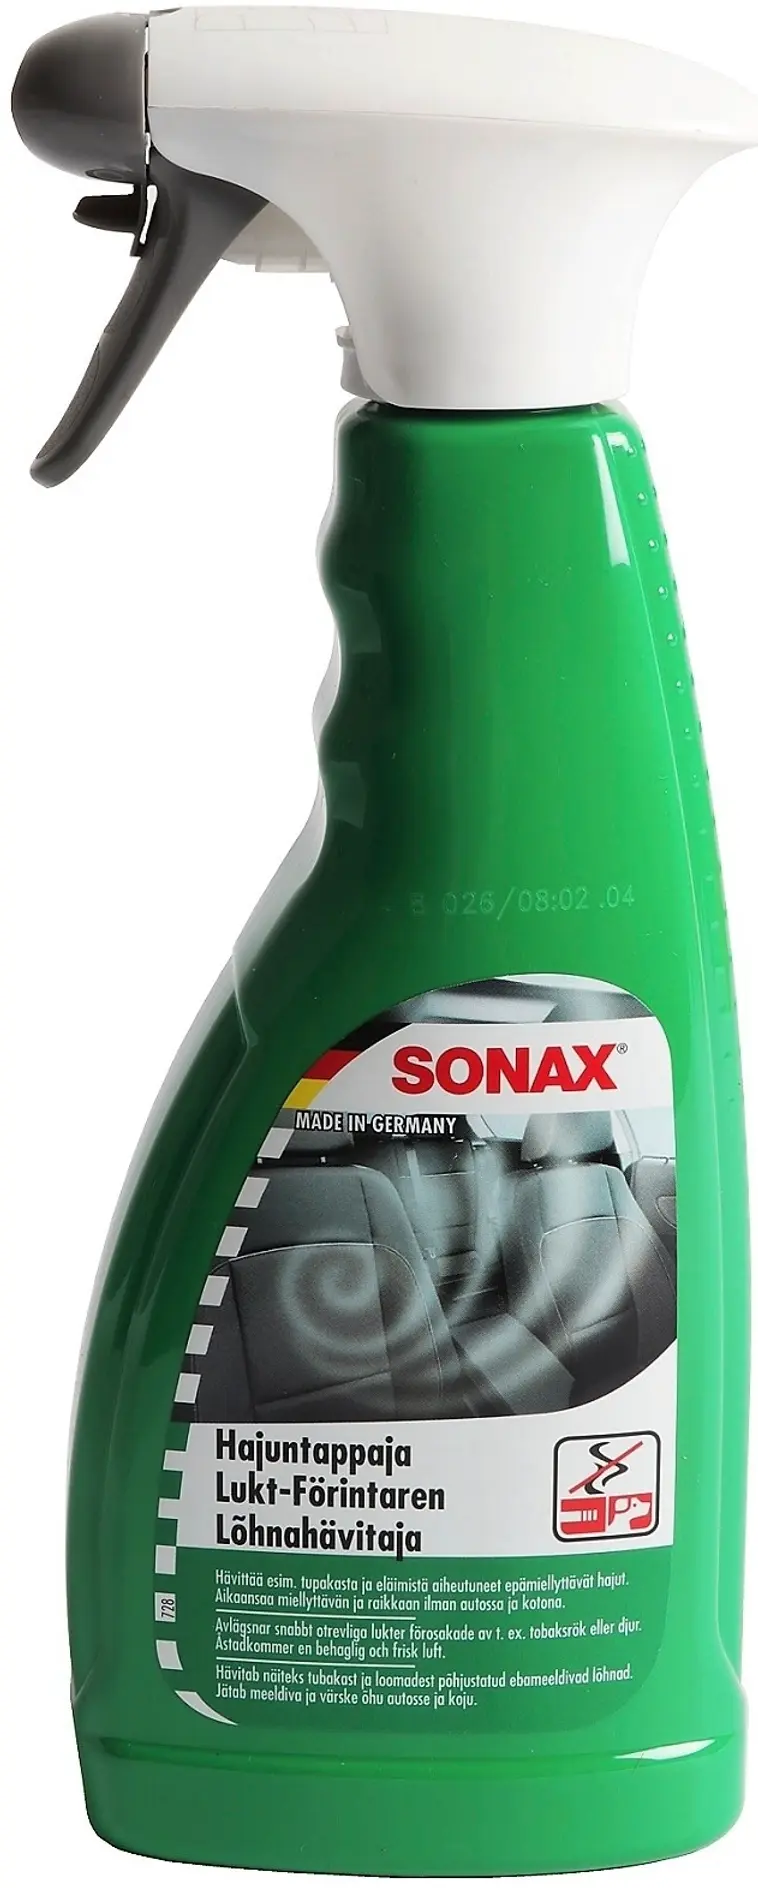 Sonax 500ml hajuntappaja | Prisma verkkokauppa